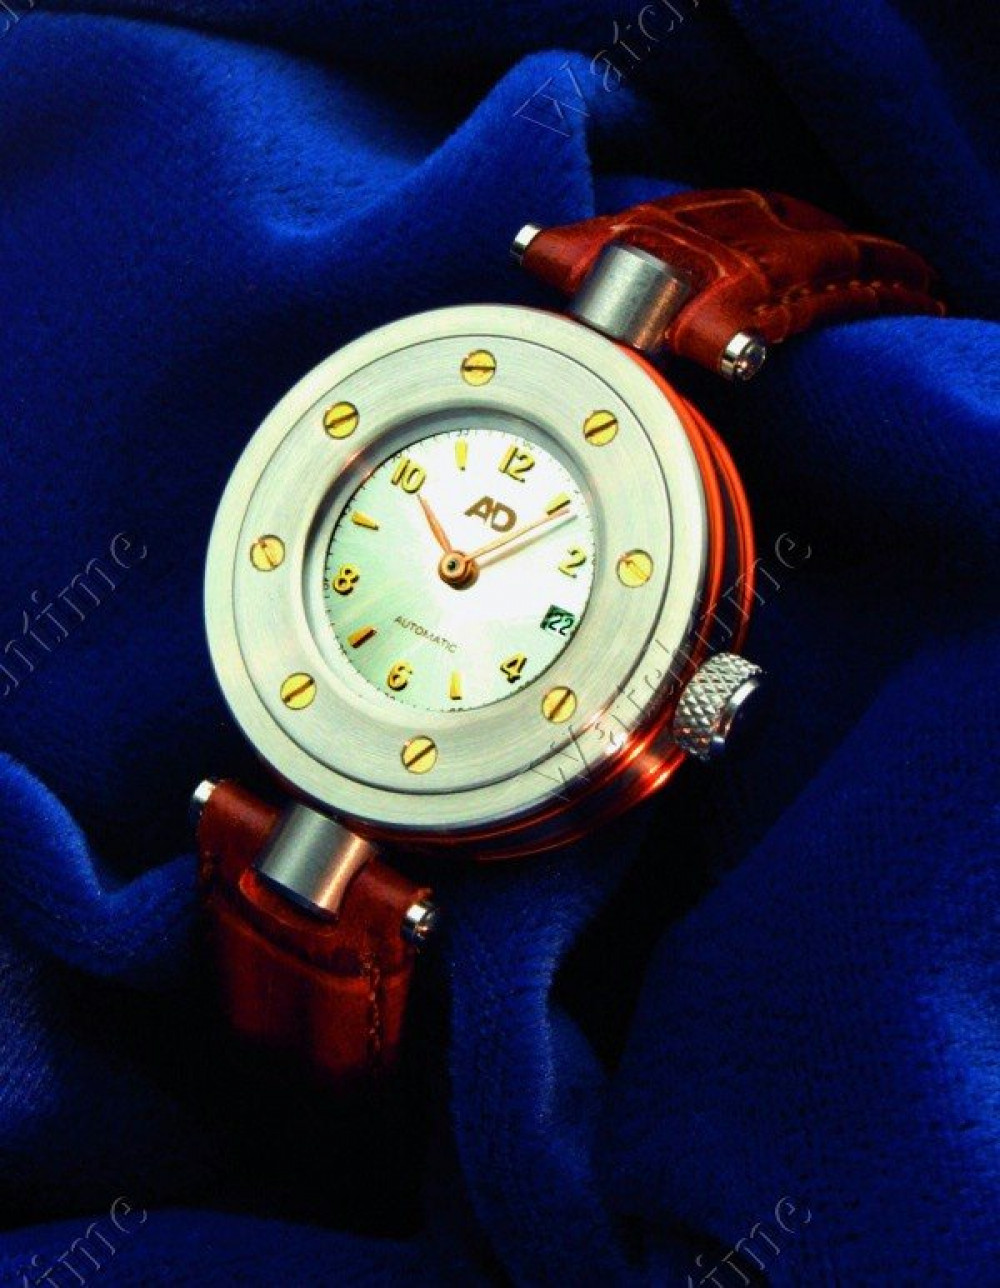 Zegarek firmy AD-Chronographen, model Medium Kupfer